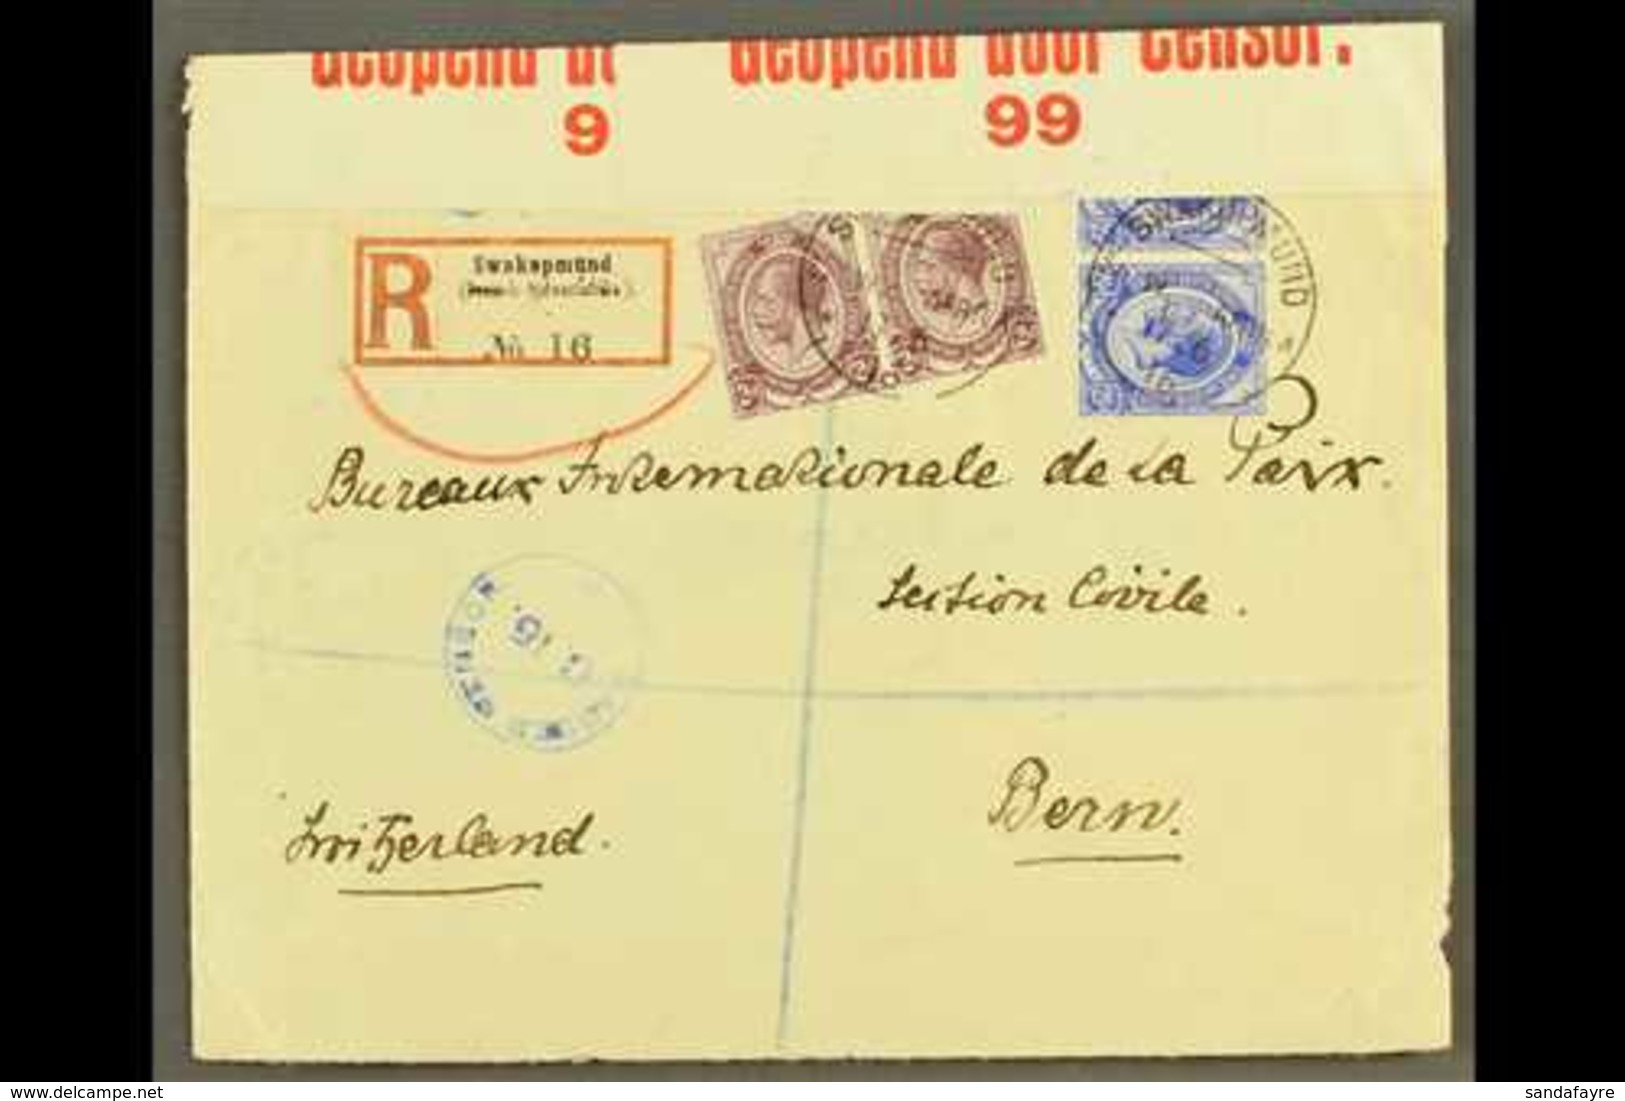 1916 (28 Jul) Registered Cover ("Deutsch" Obliterated From Reg Label) From Swakopmund To Berne (the Bureaux Internationa - Afrique Du Sud-Ouest (1923-1990)